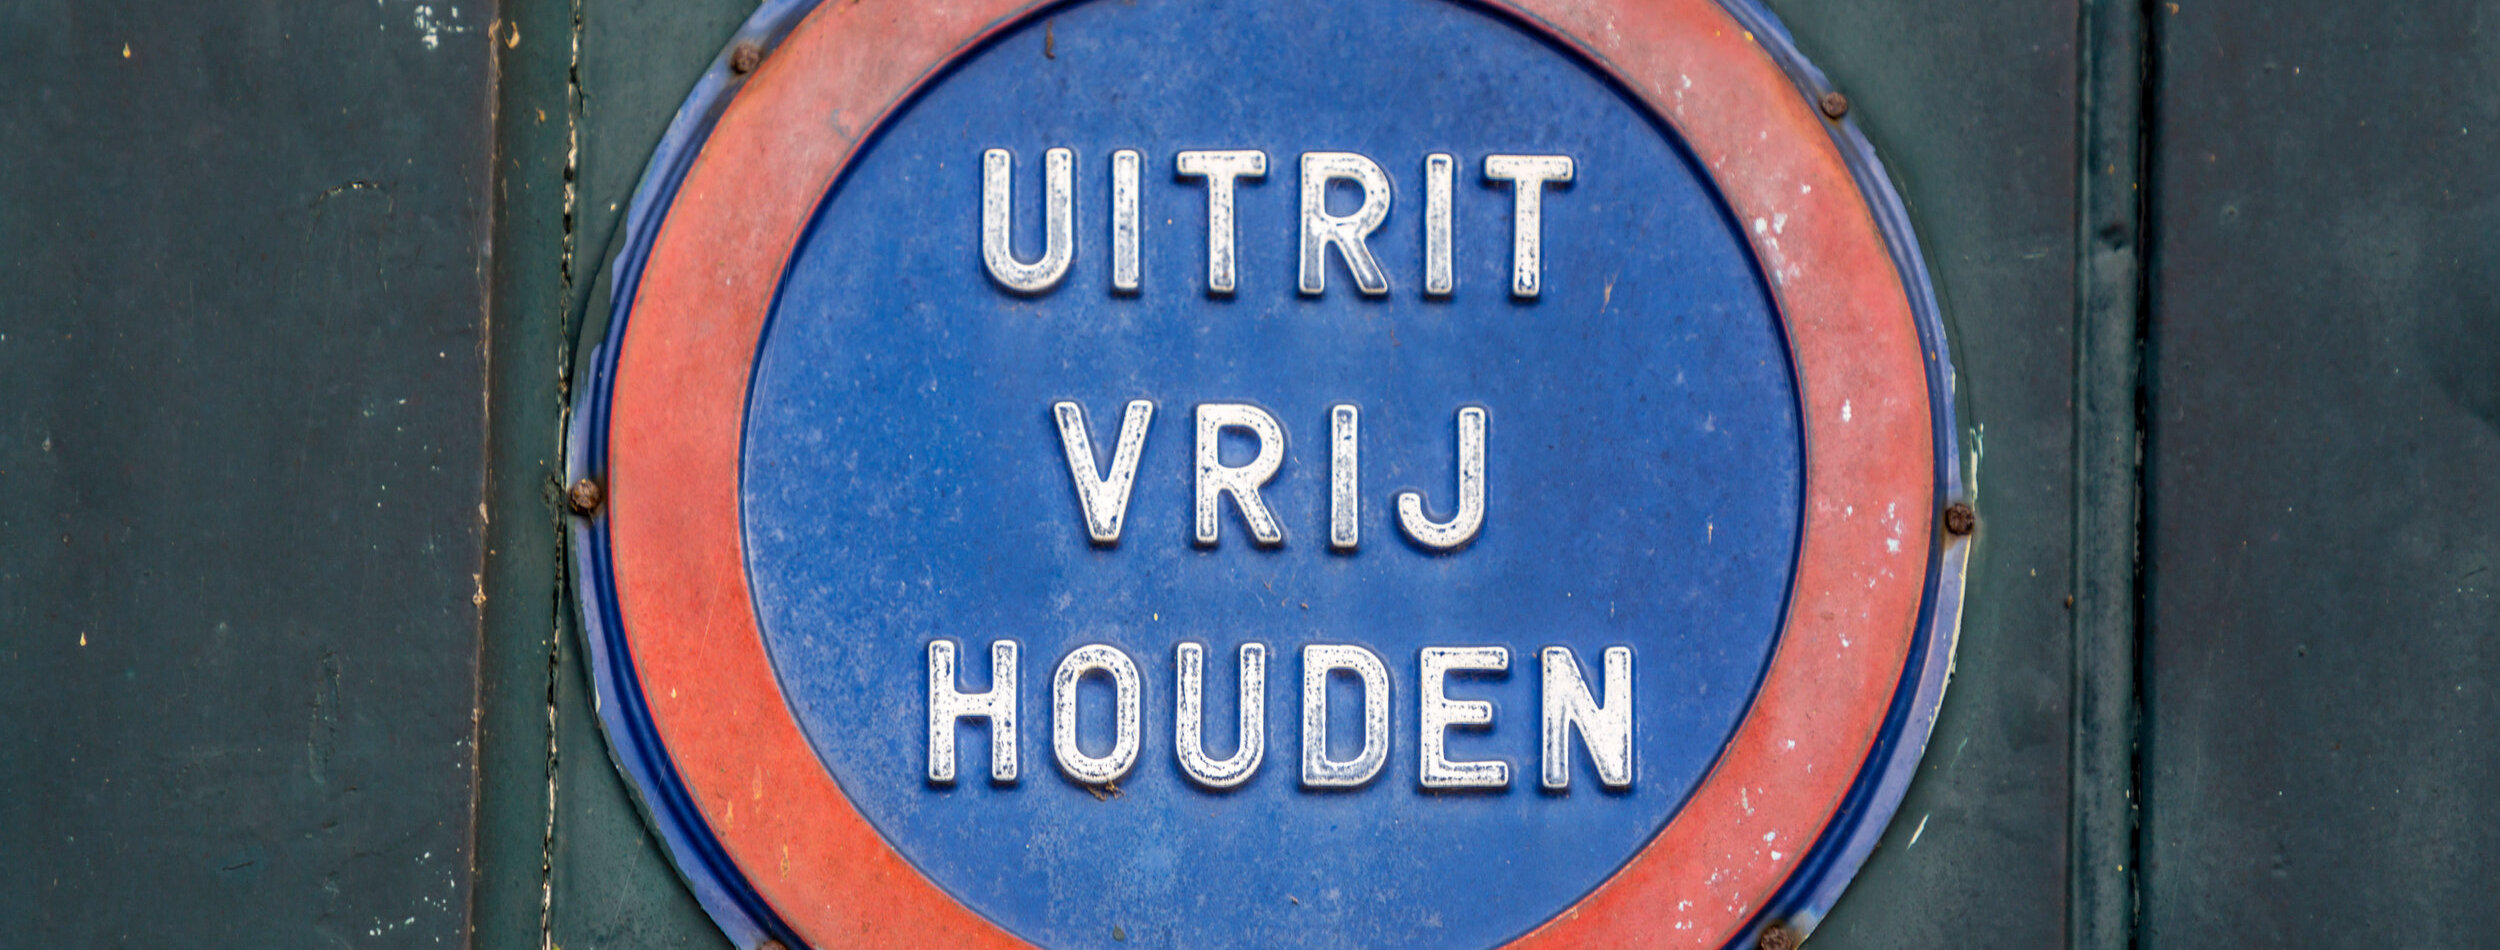 Dutch garage door warning sign. The Dutch text translates as Exit, Keep Empty.